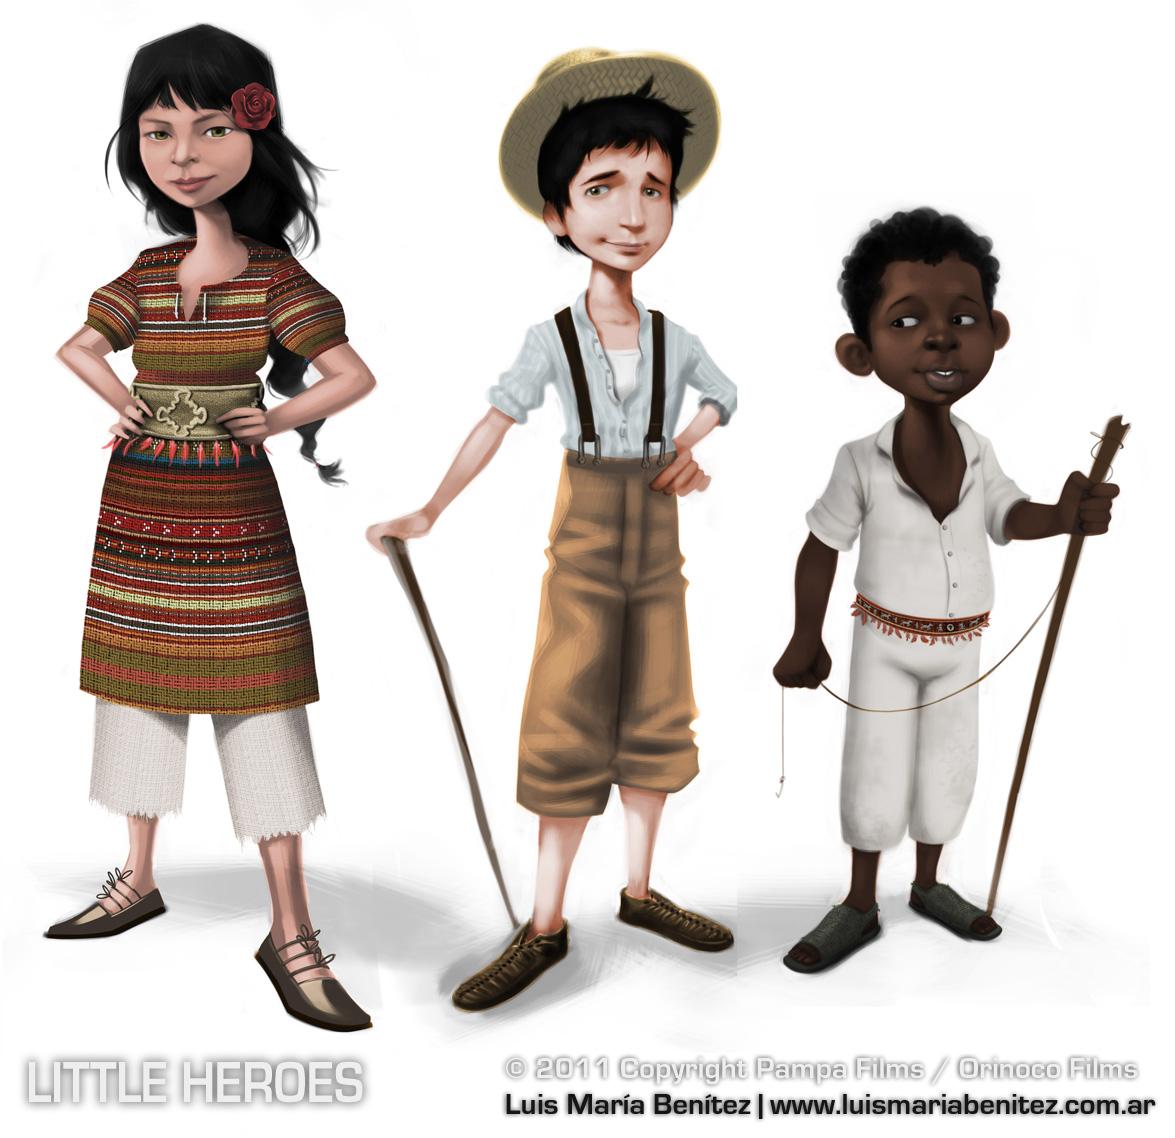 personajes / characters © Luis María Benítez